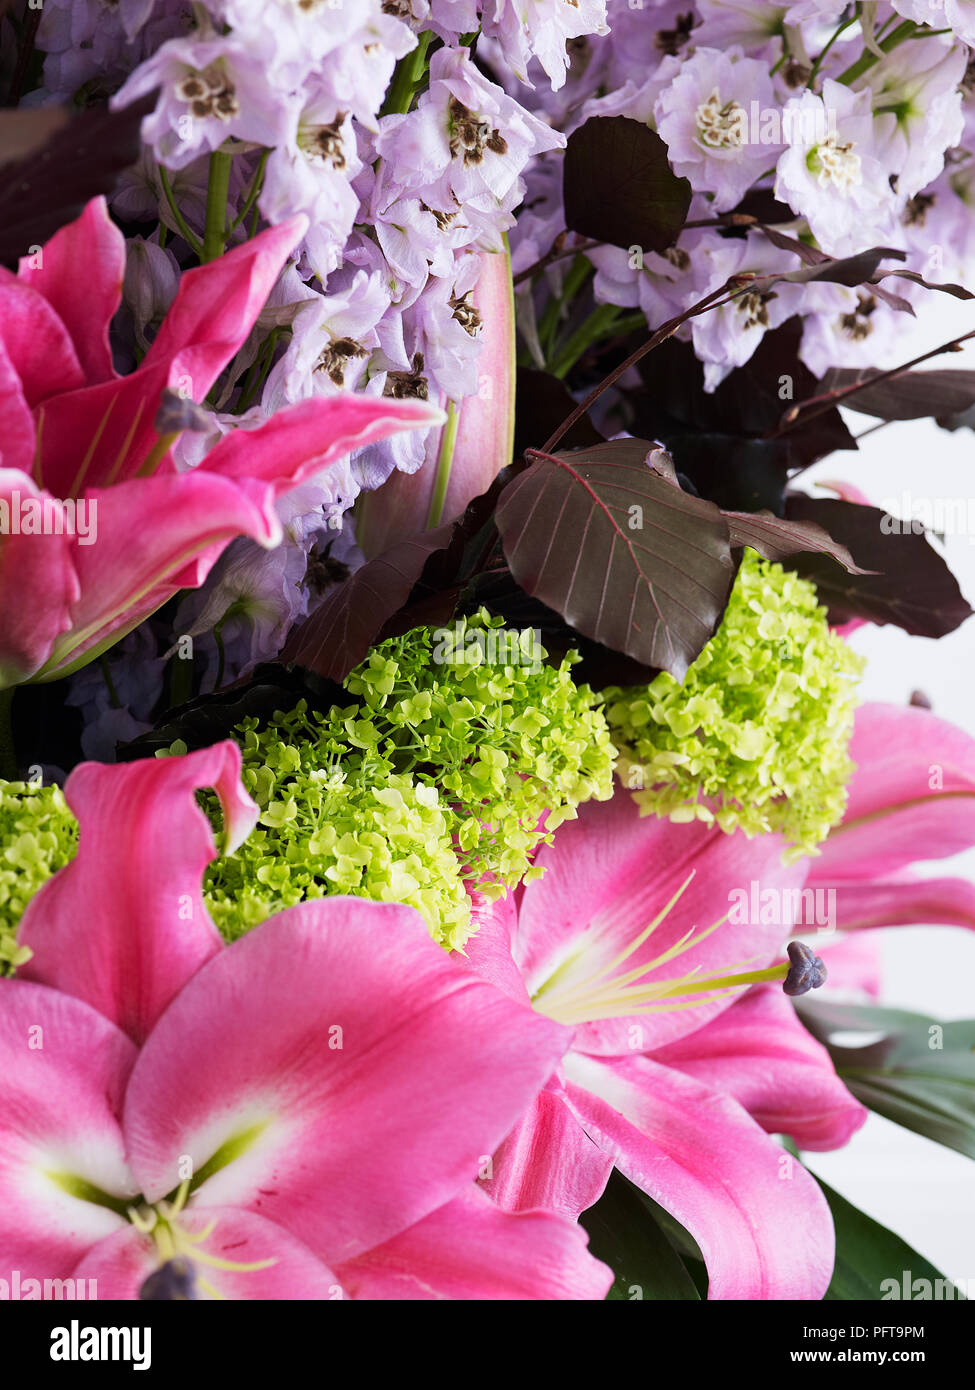 Layered flower arrangement, lilies, hydrangea, copper beech leaves, delphinium Stock Photo